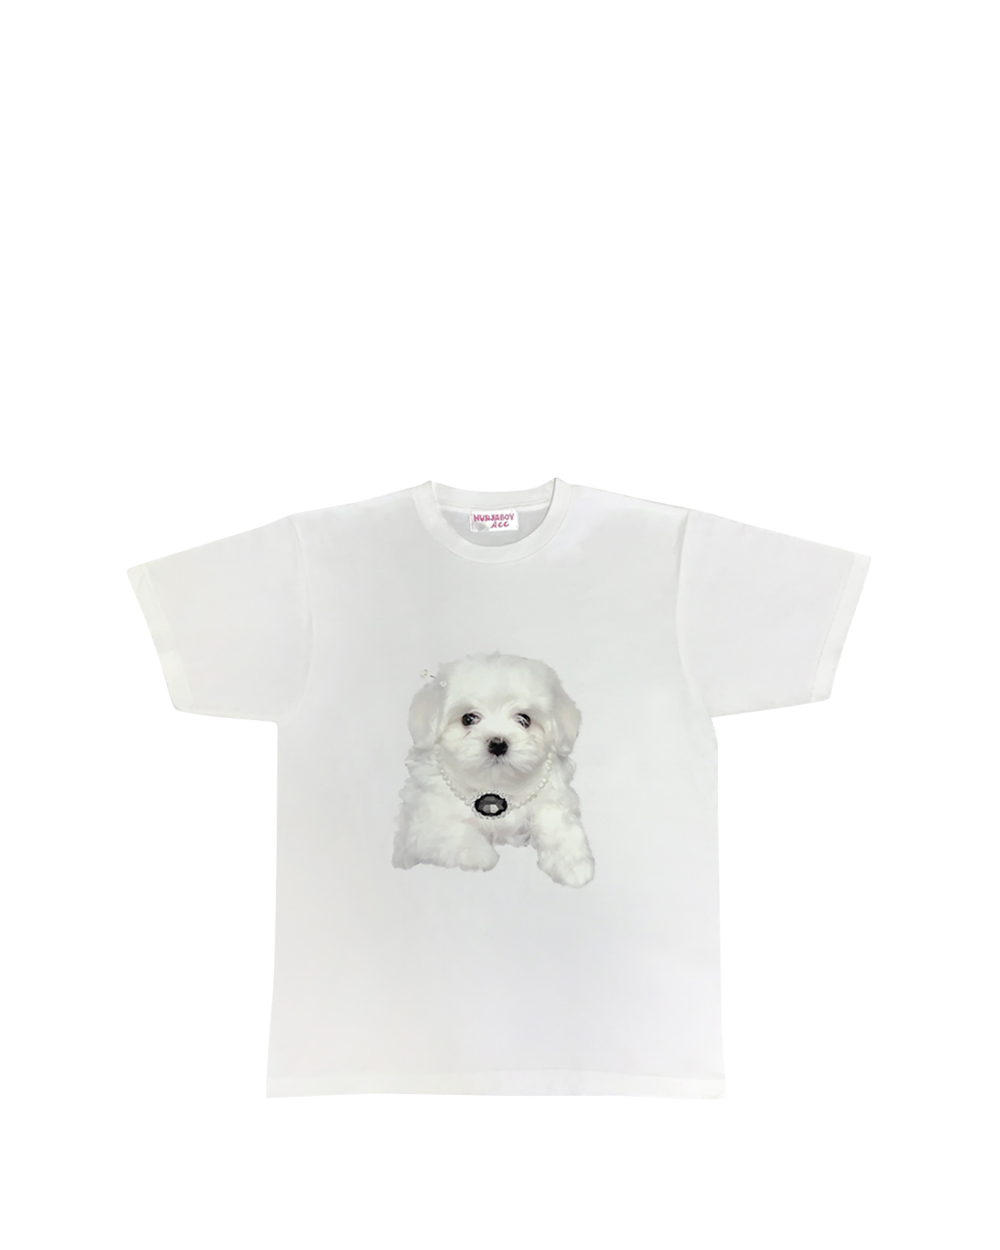 Puppy t-shirts